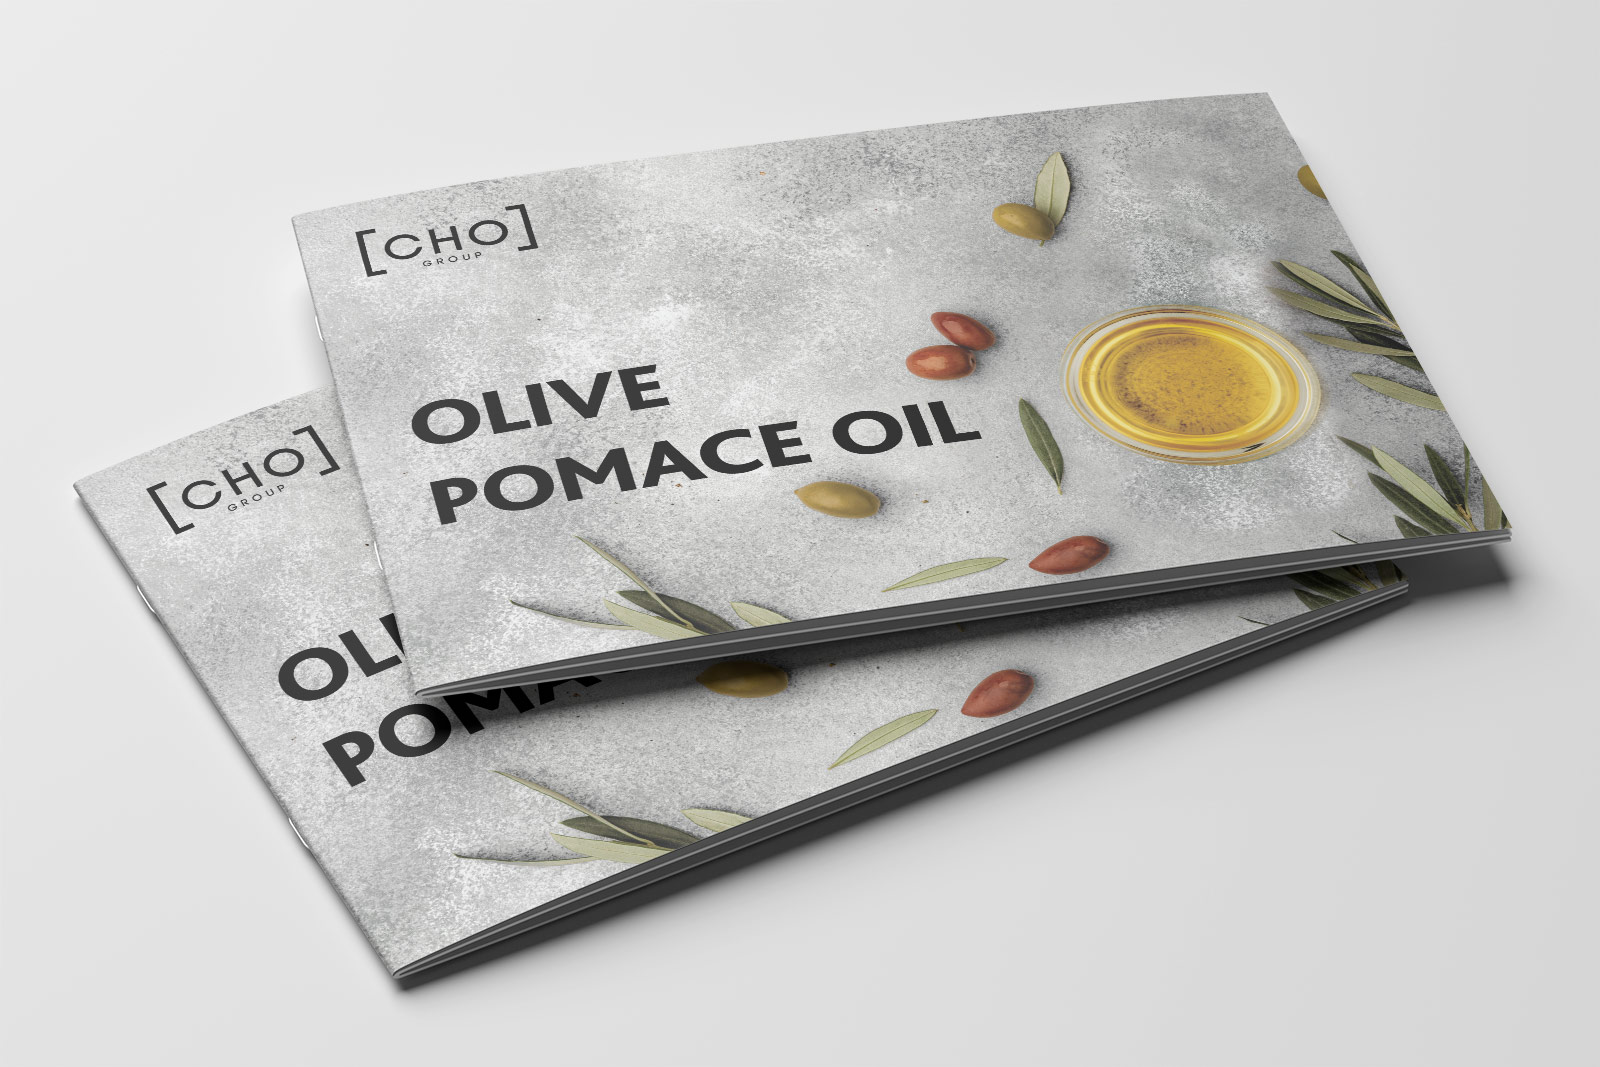 Catalogue - CHO's Pomace olive oil